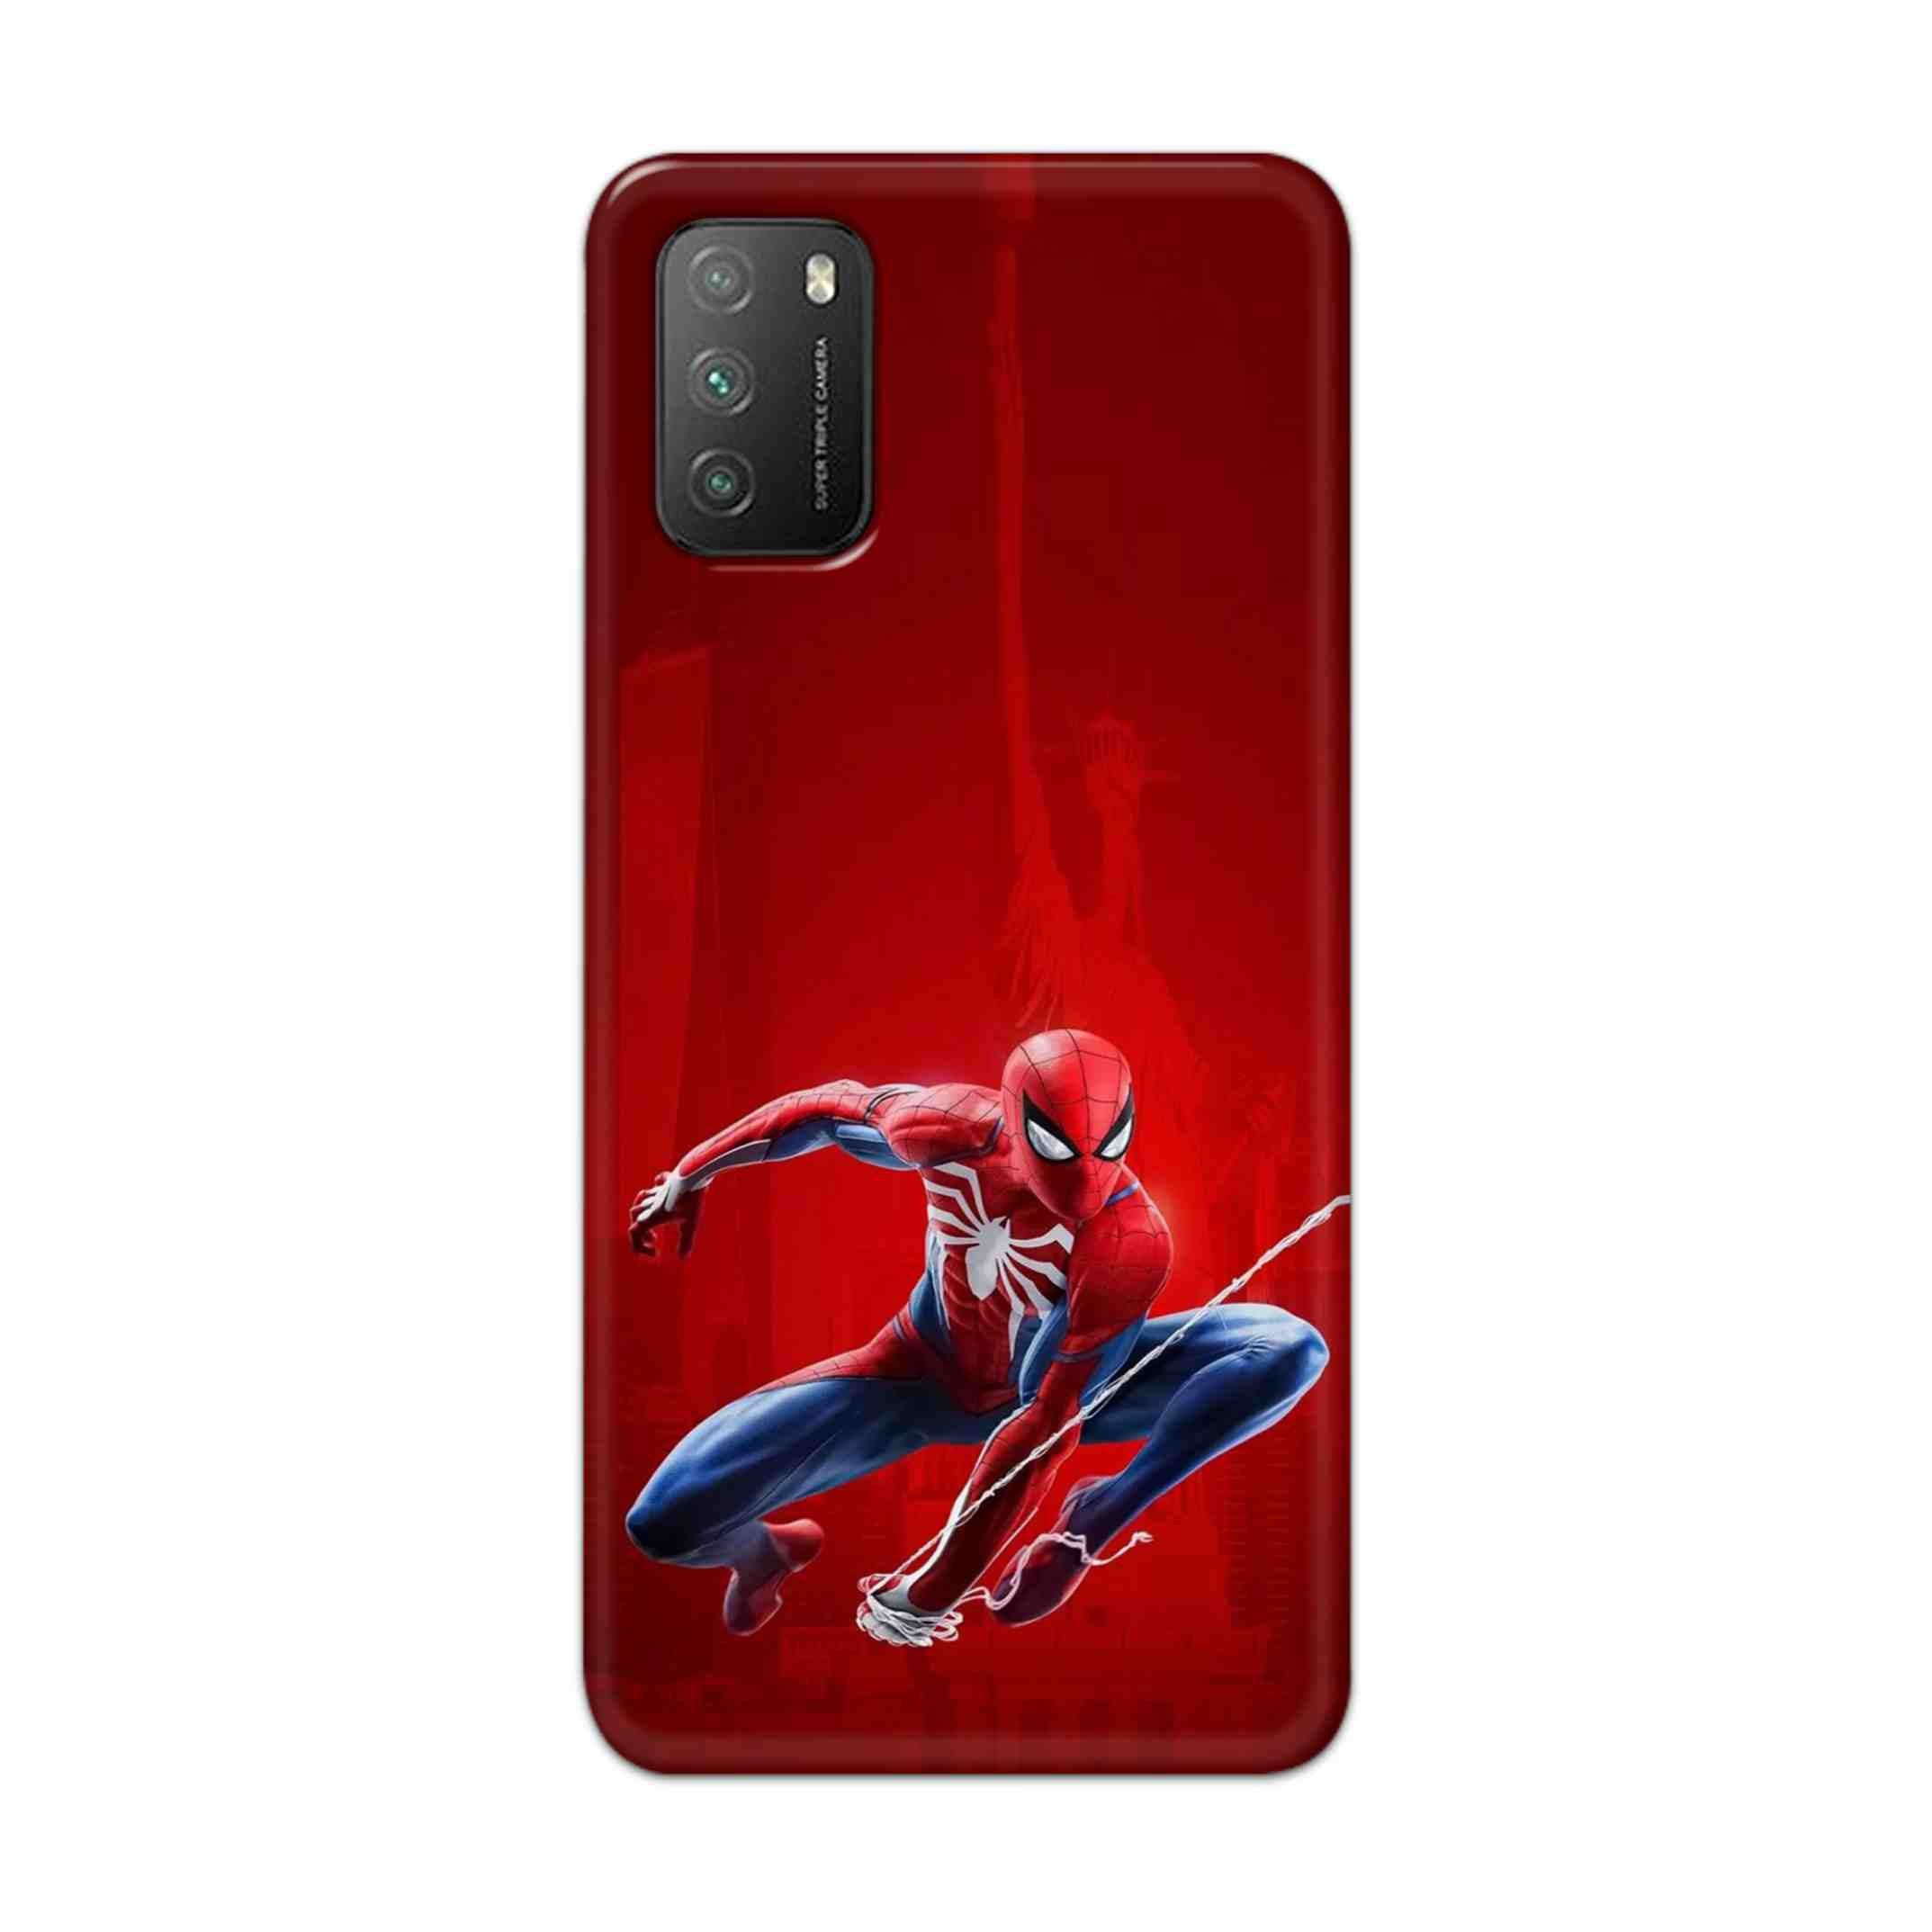 Buy Spiderman Hard Back Mobile Phone Case Cover For Poco M3 Online